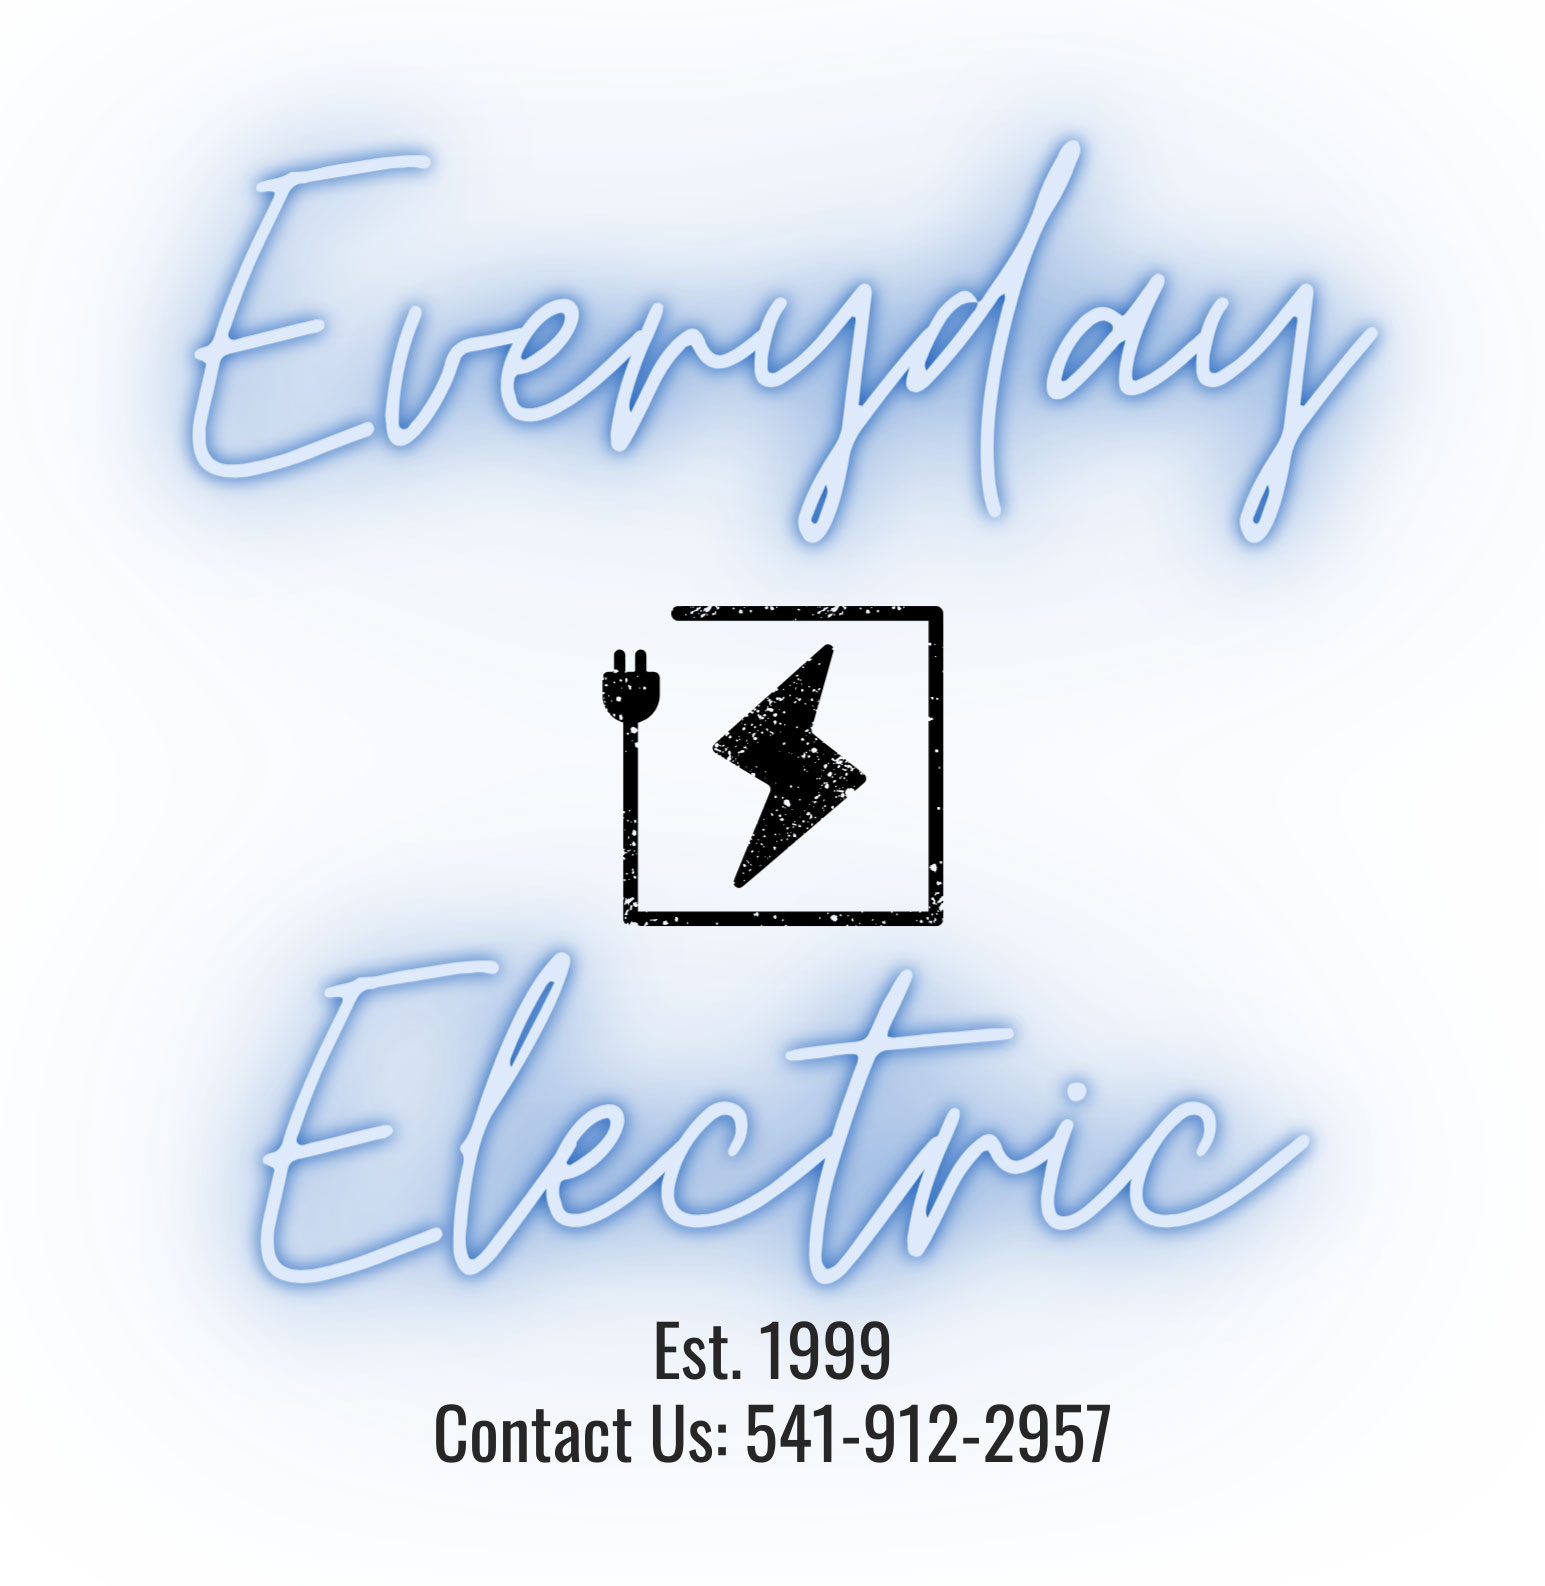 Everyday Electric